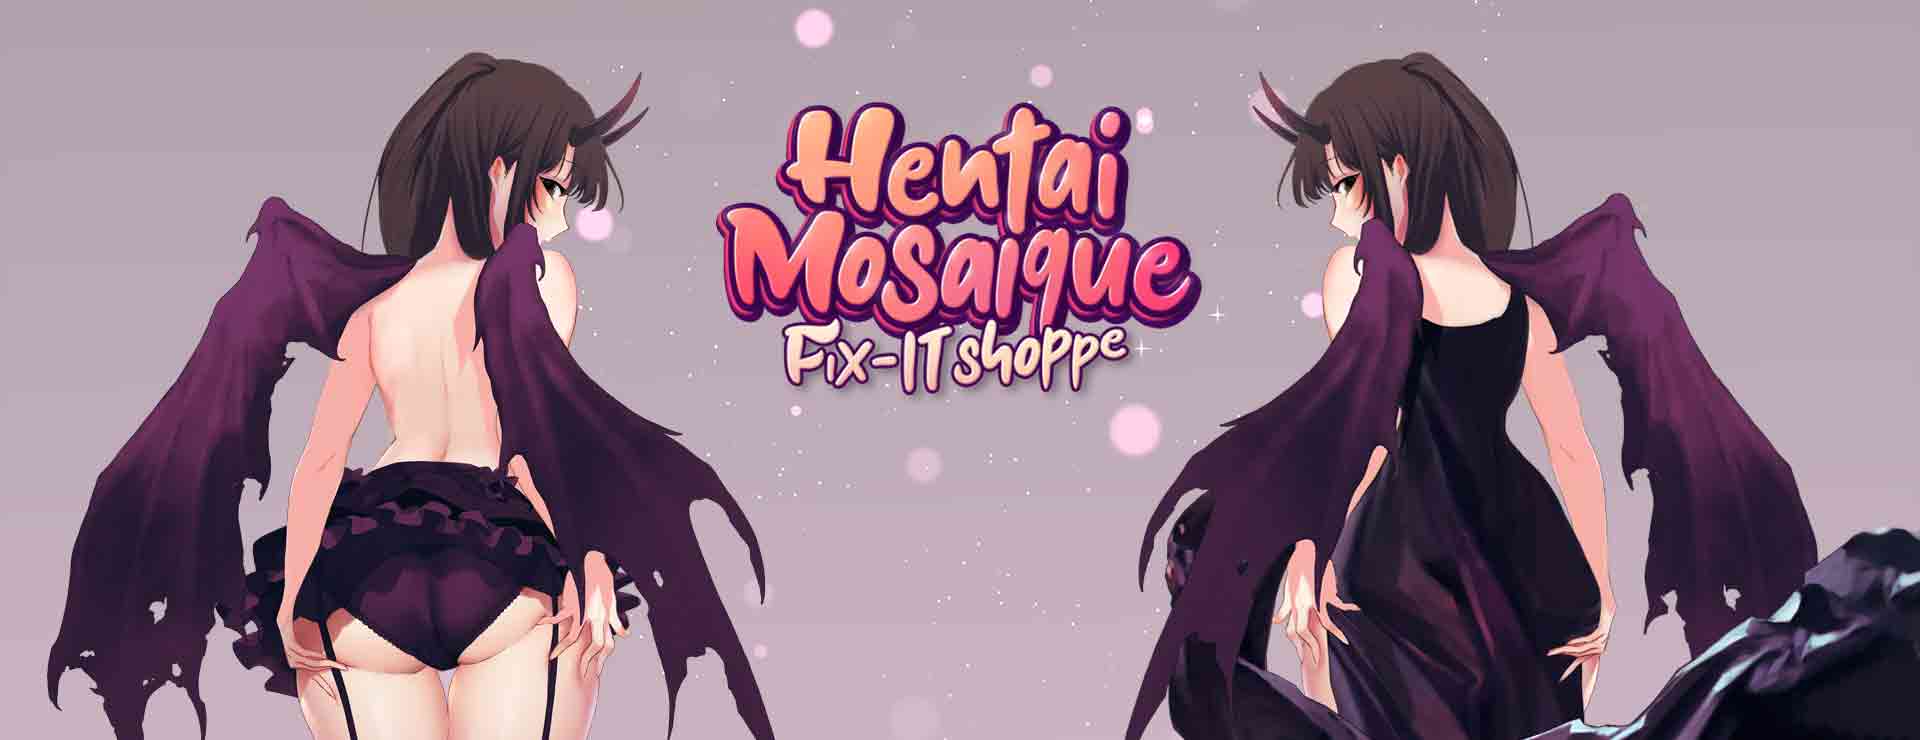 Hentai Mosaique Fix-IT Shoppe - Casual Juego